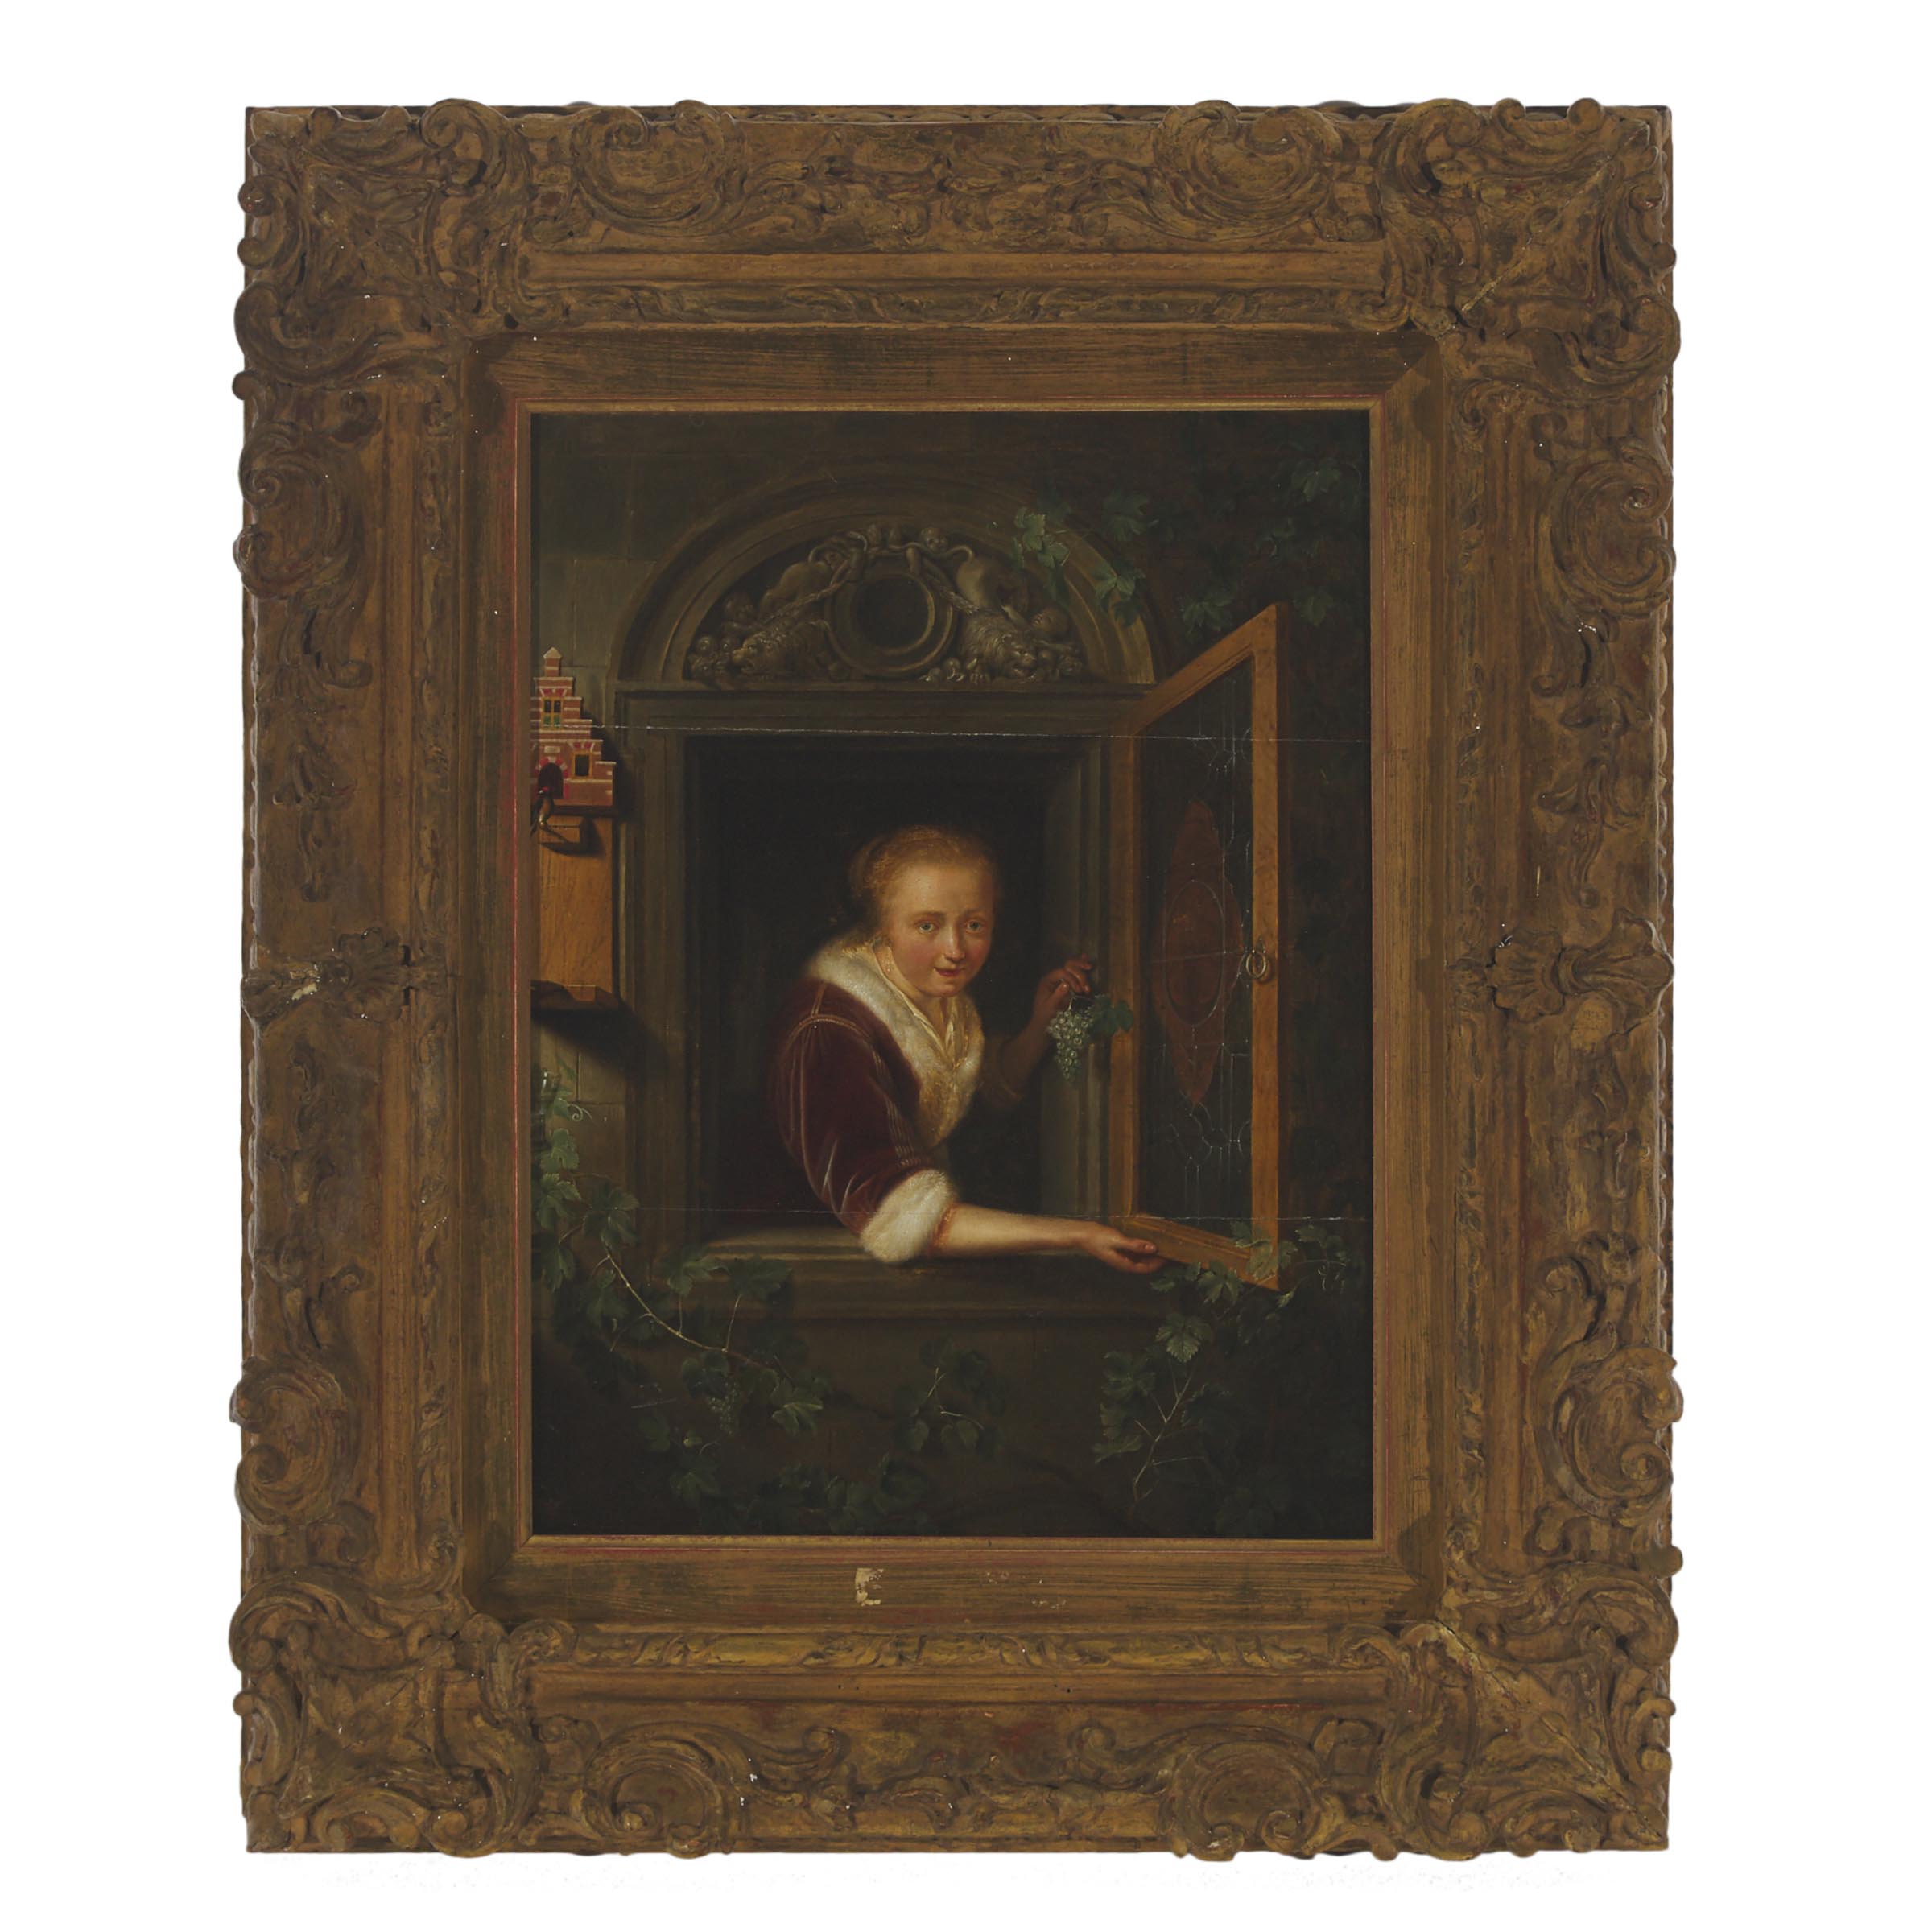 After Gerrit Dou (1613-1675)